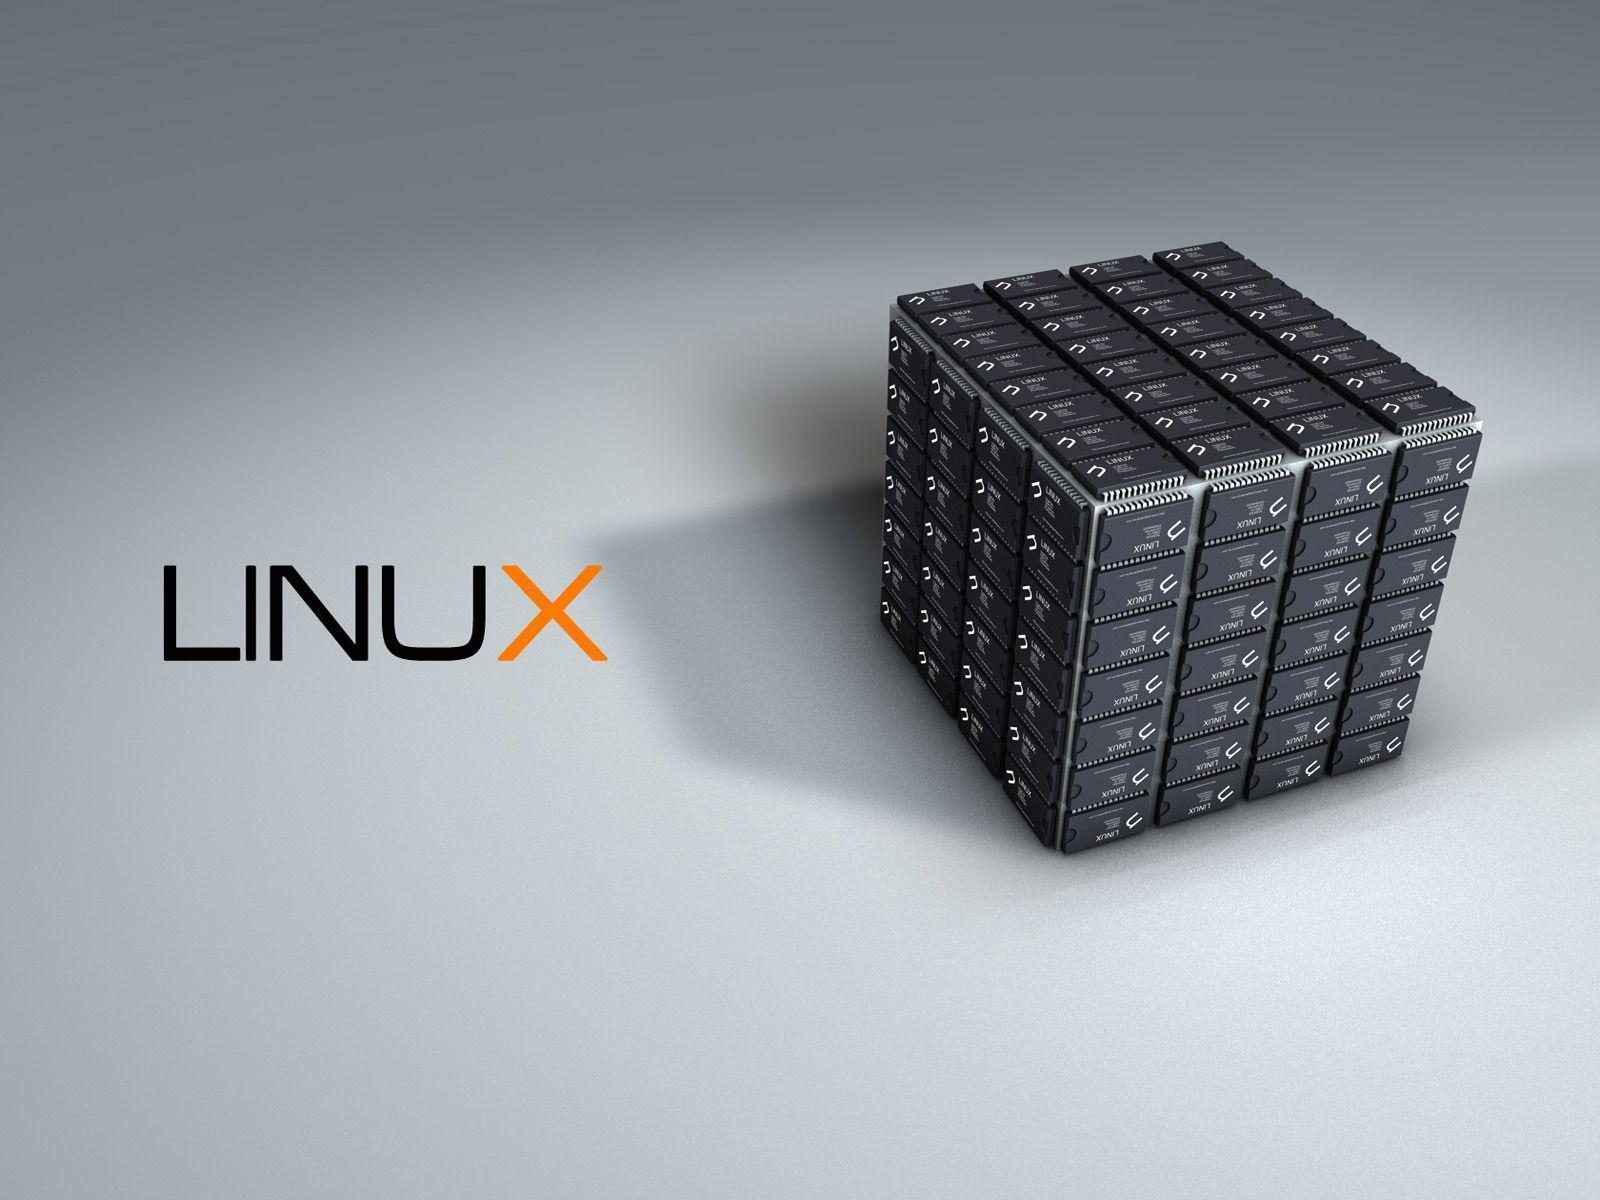 Linux CPU Cube Wallpaper Linux Computers Wallpaper in jpg format